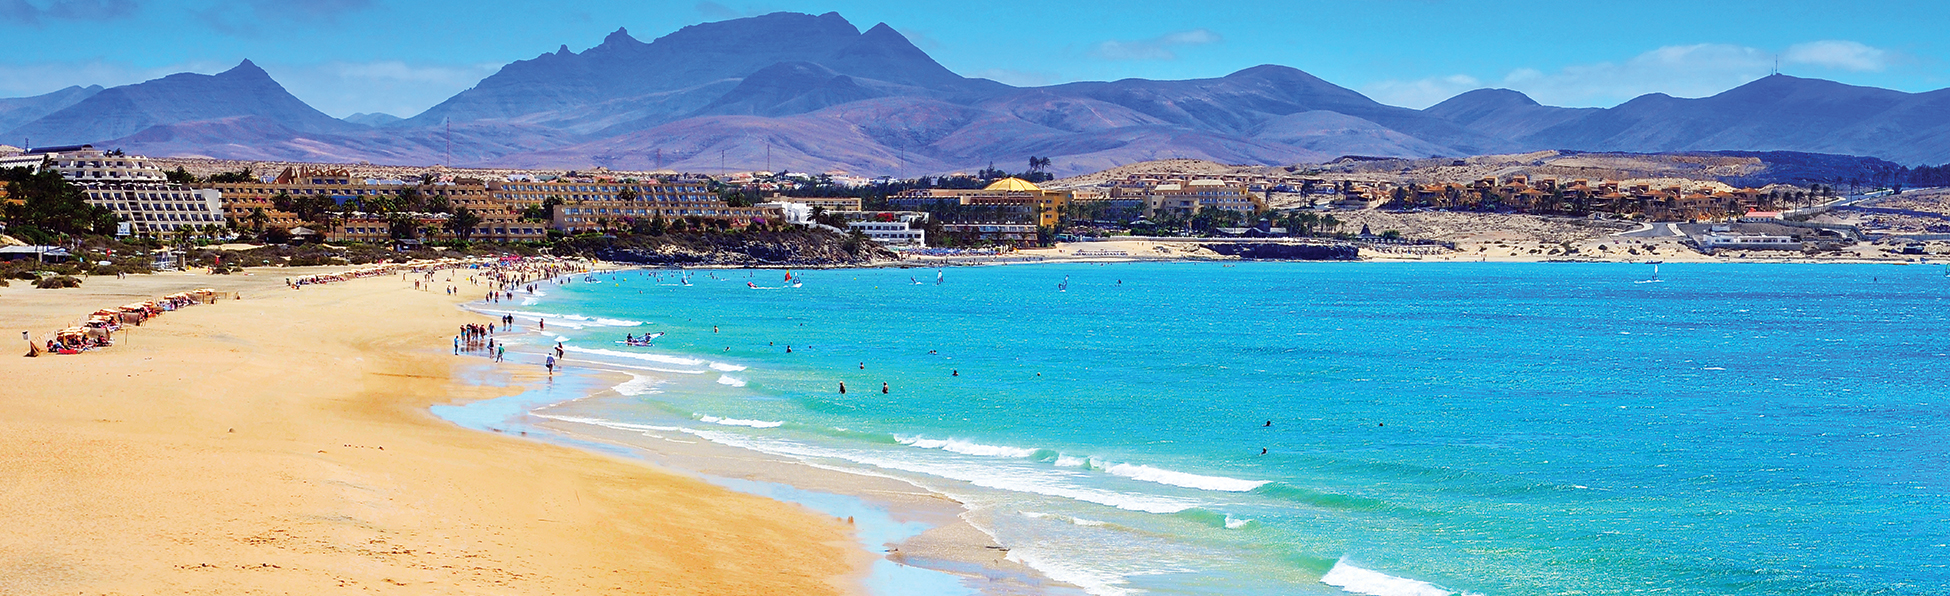 Spain Fuerteventura Services Adult In